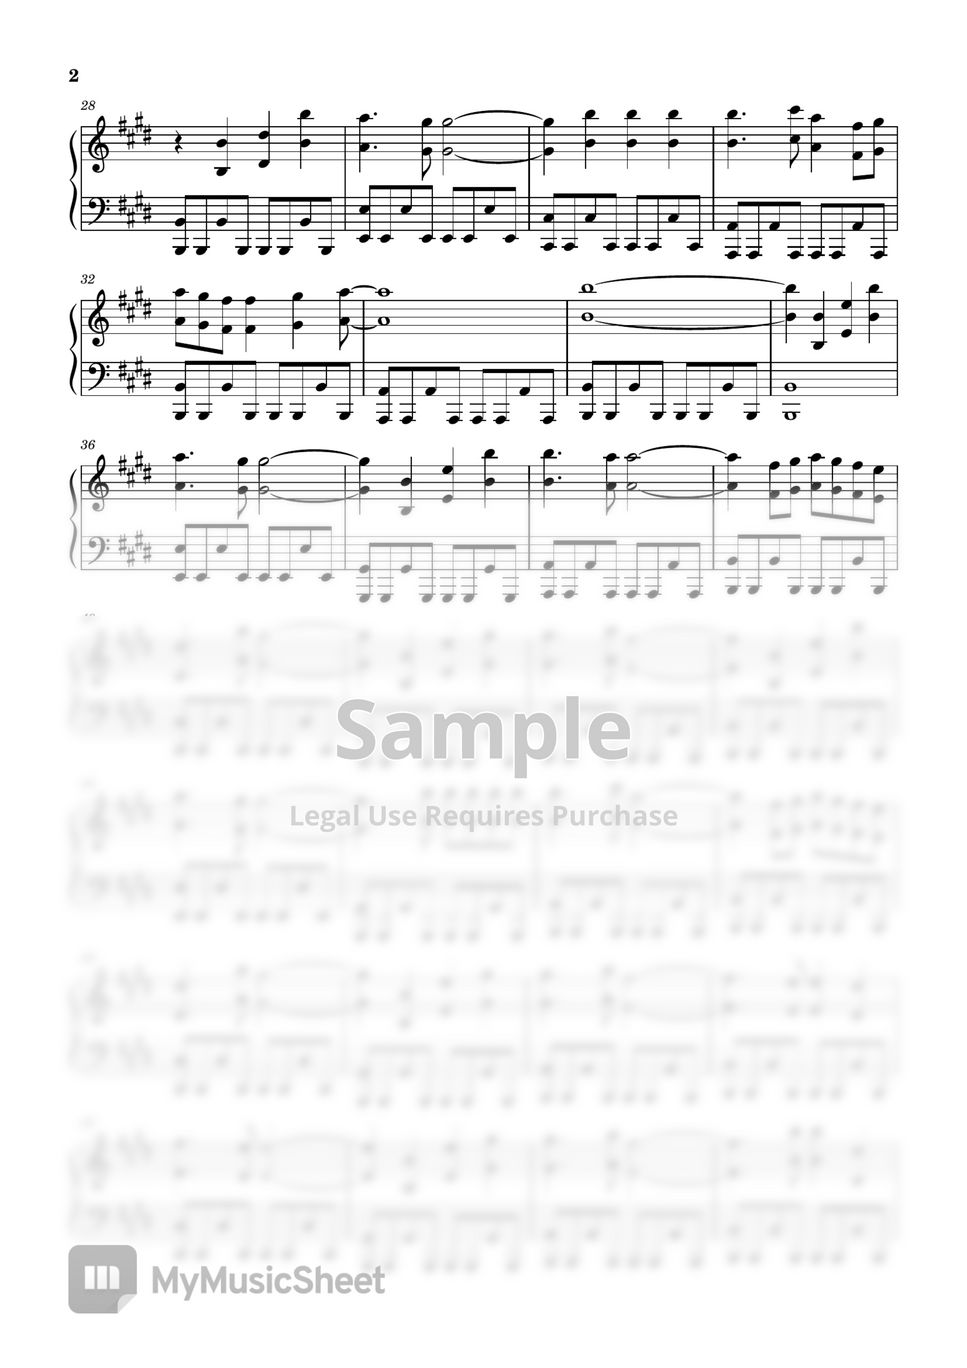 Paripi Koumei Opening 1 - piano tutorial